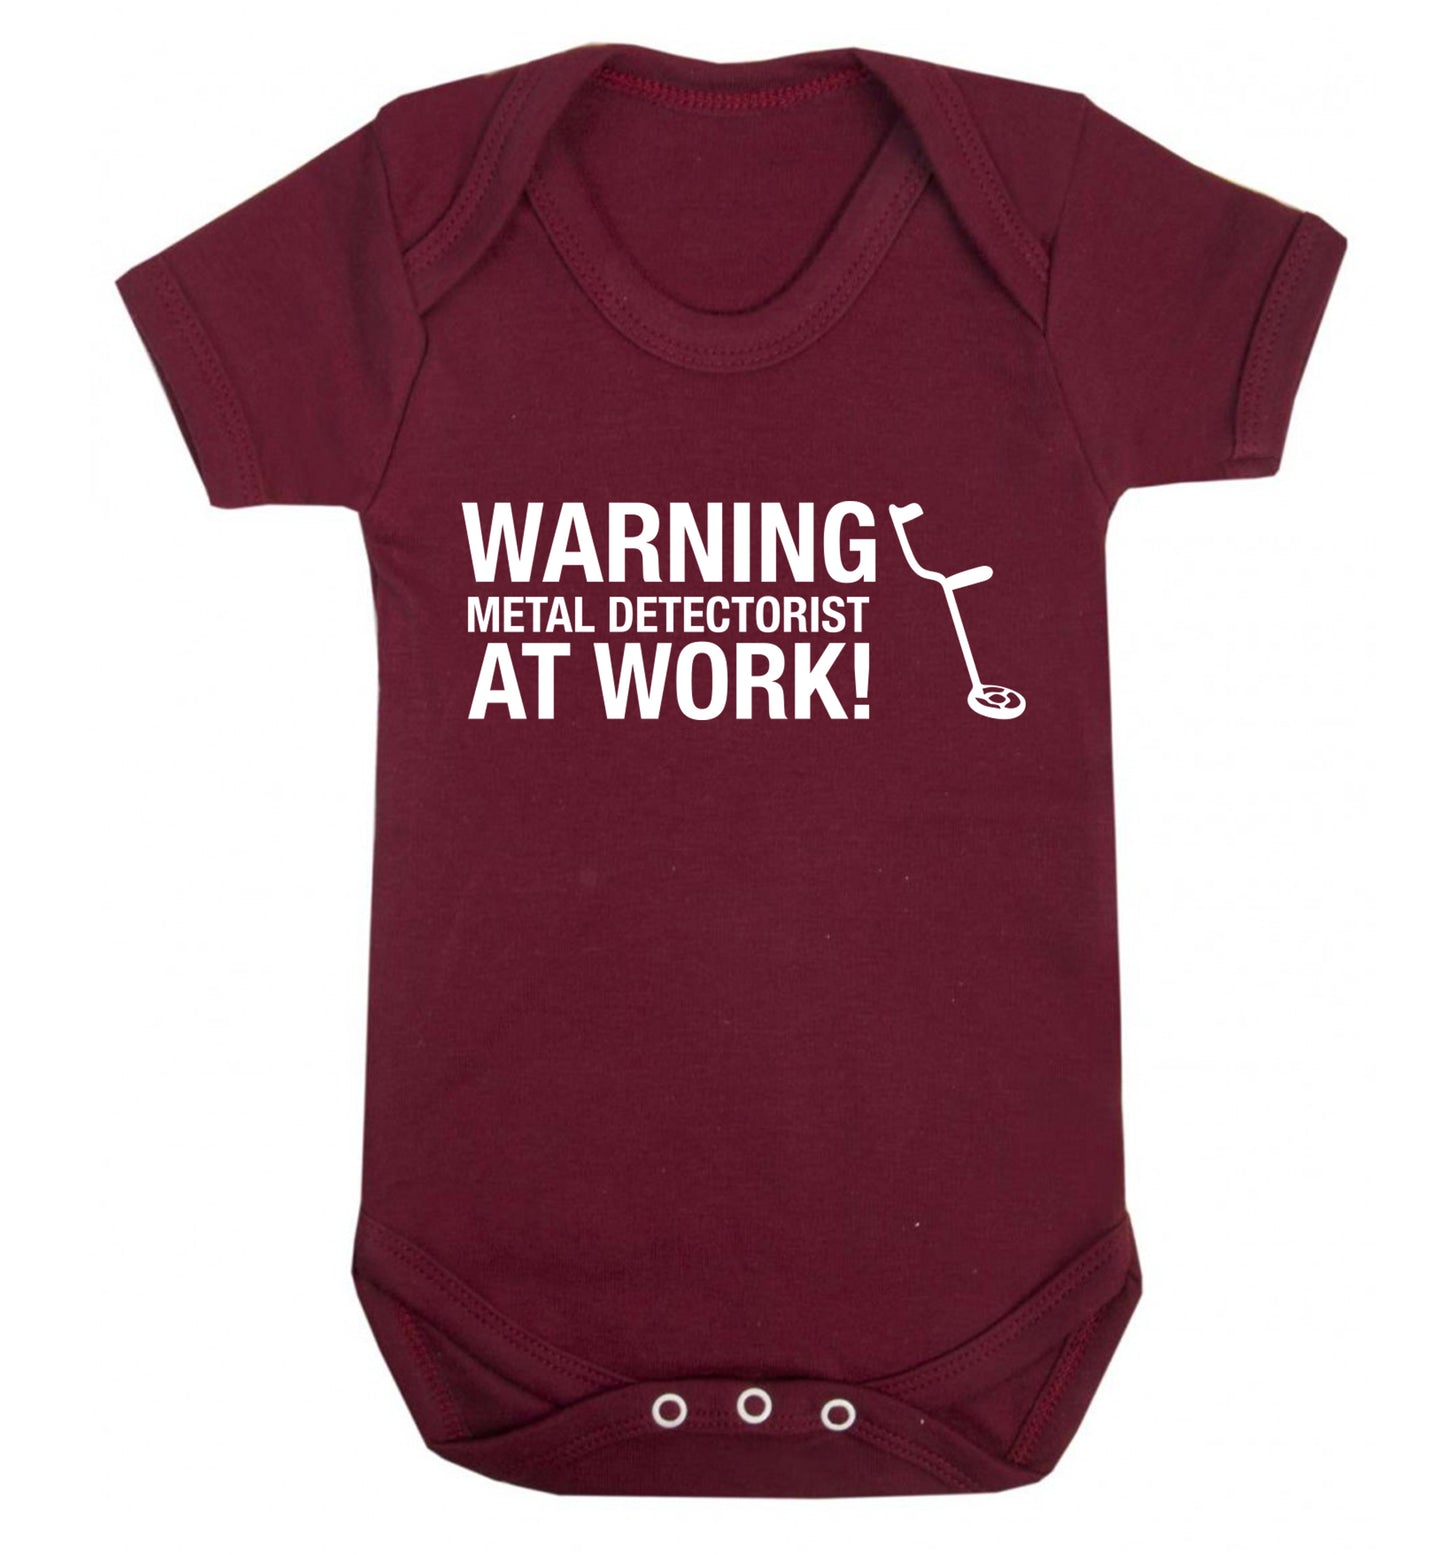 Warning metal detectorist at work! Baby Vest maroon 18-24 months